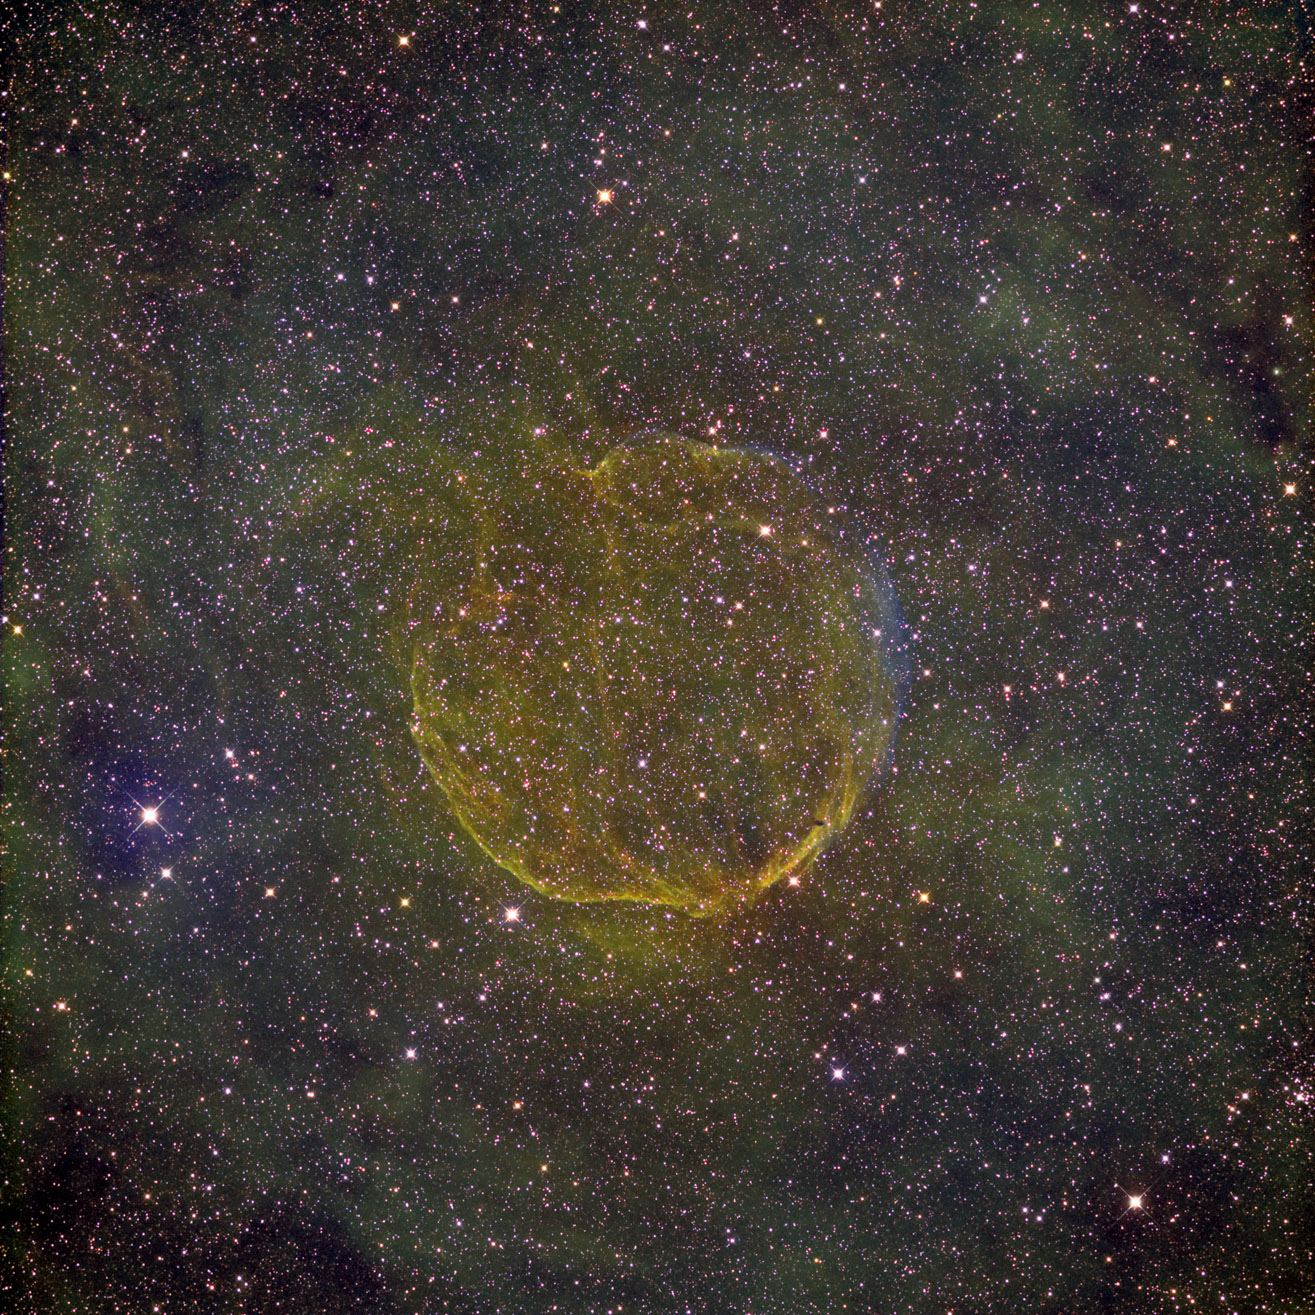 CTB1 Supernova Remnant in Cassiopeia